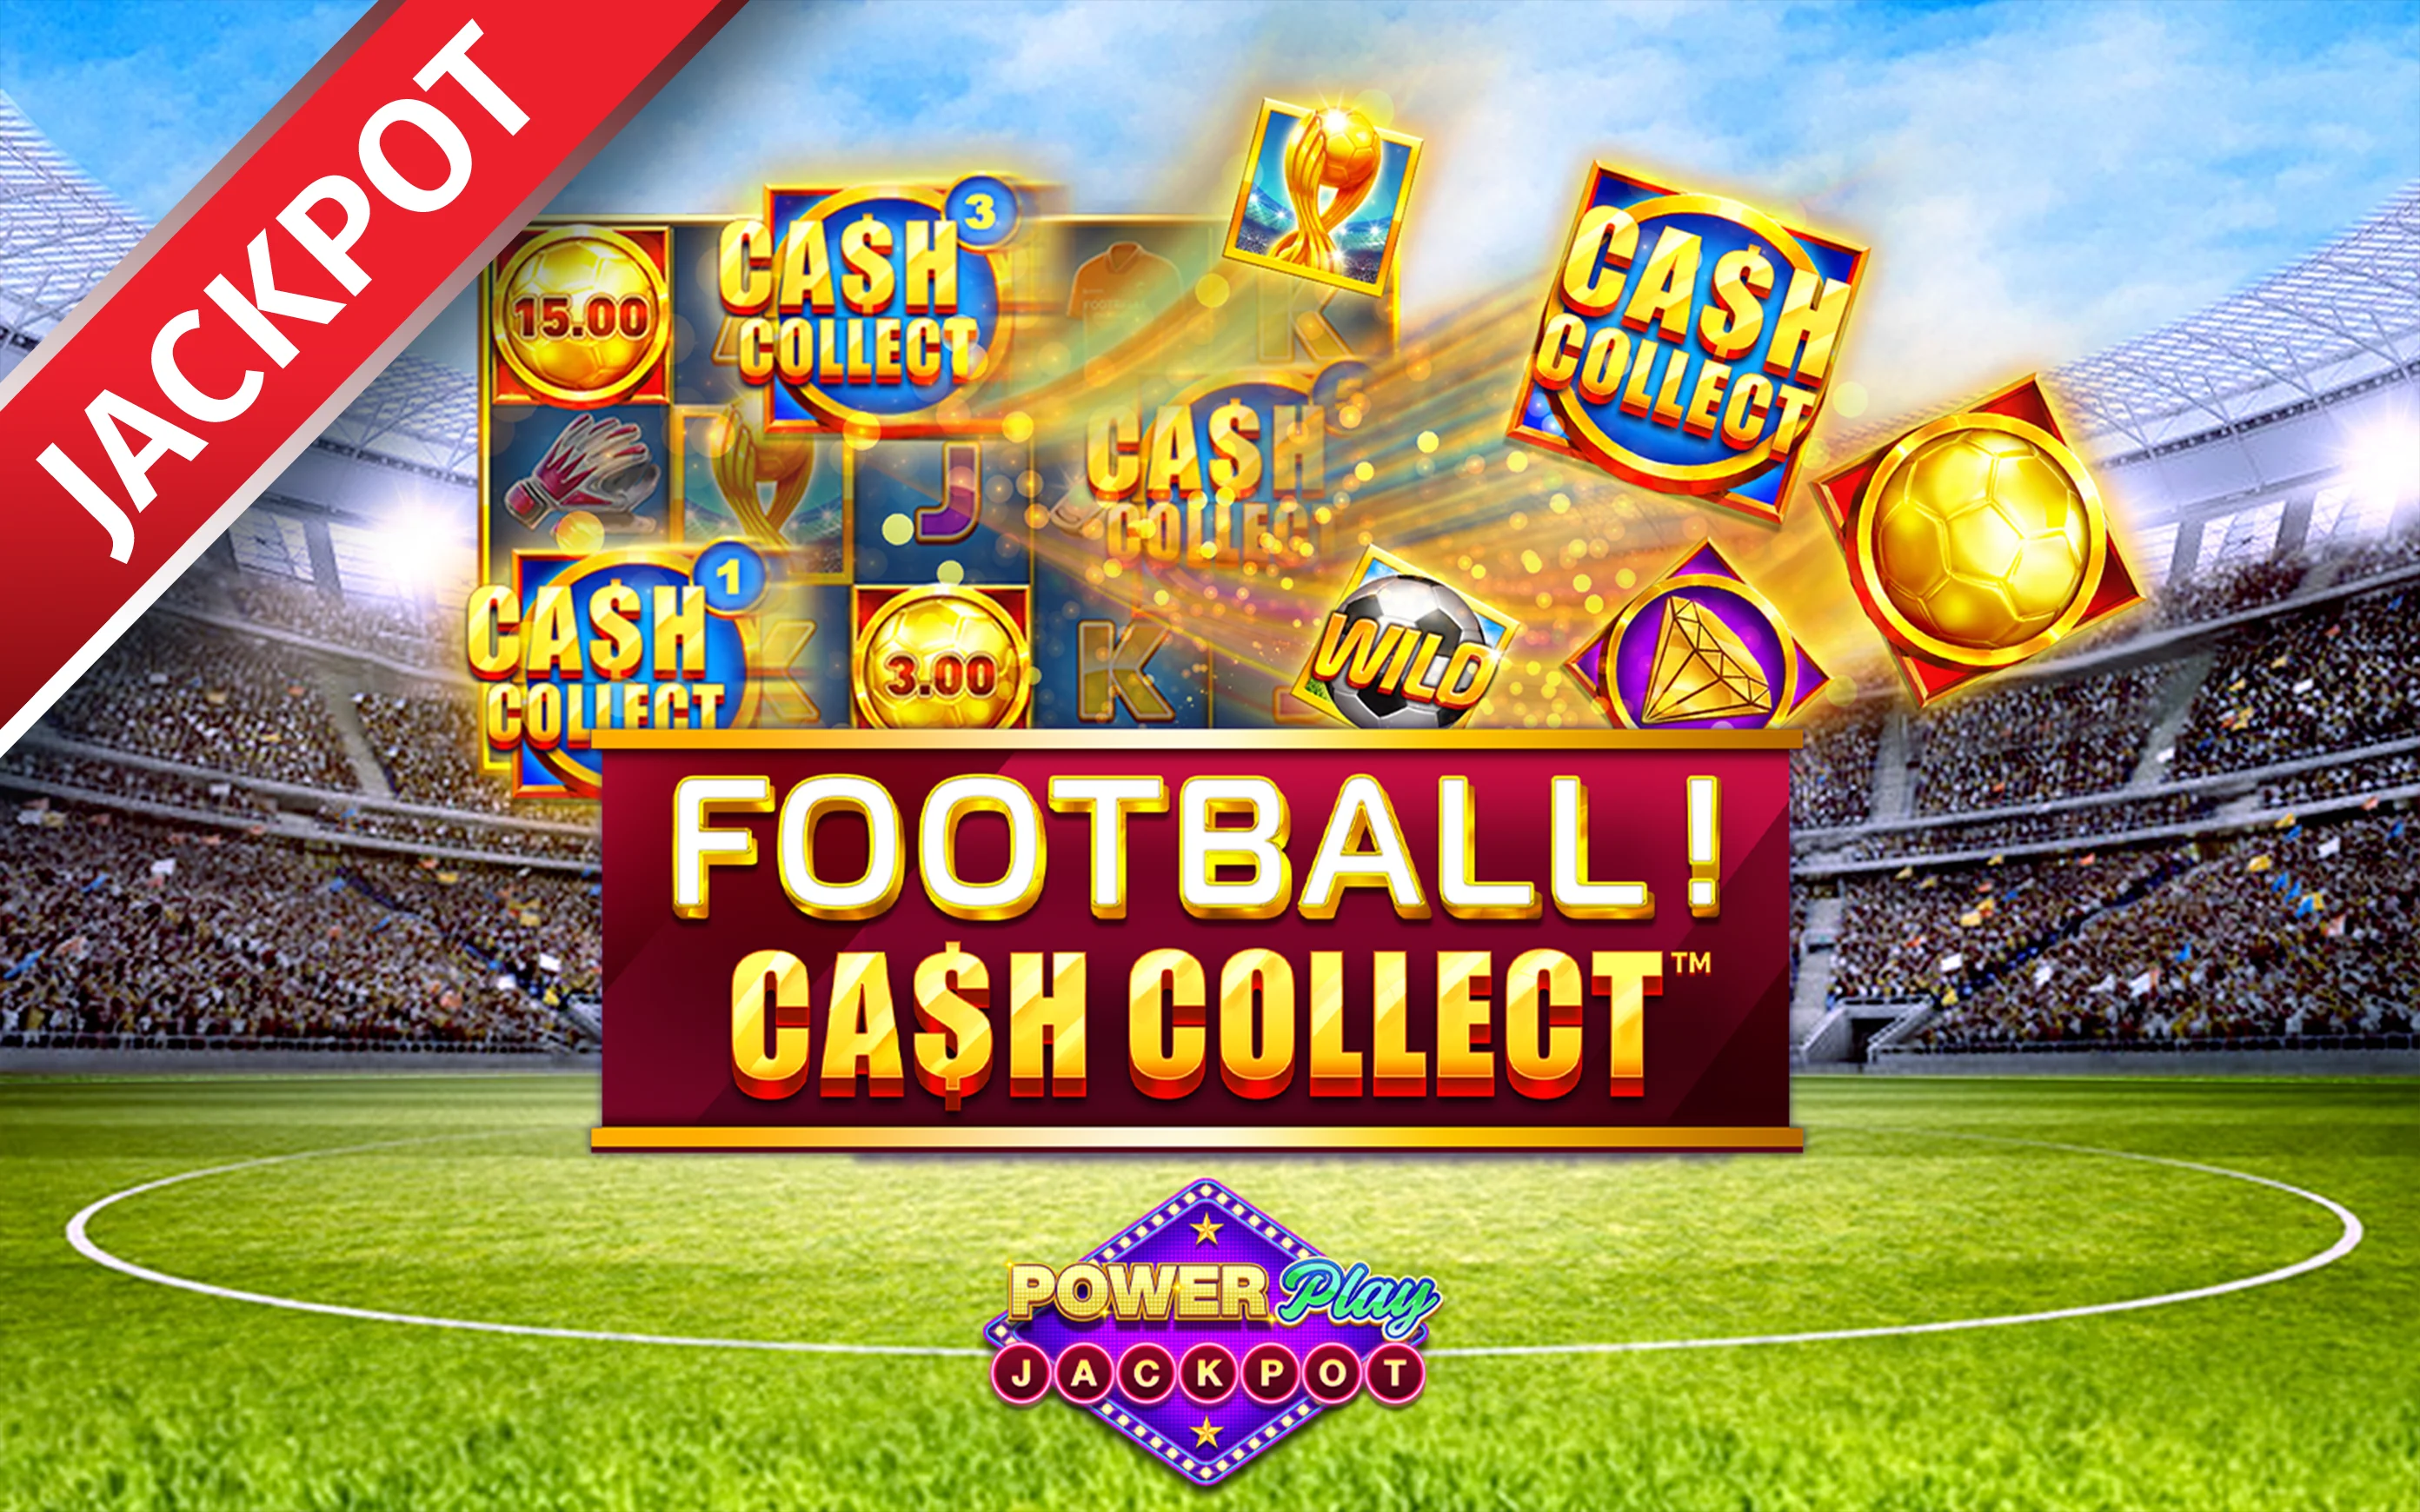 Gioca a Football! Cash Collect™ PowerPlay Jackpot sul casino online Starcasino.be